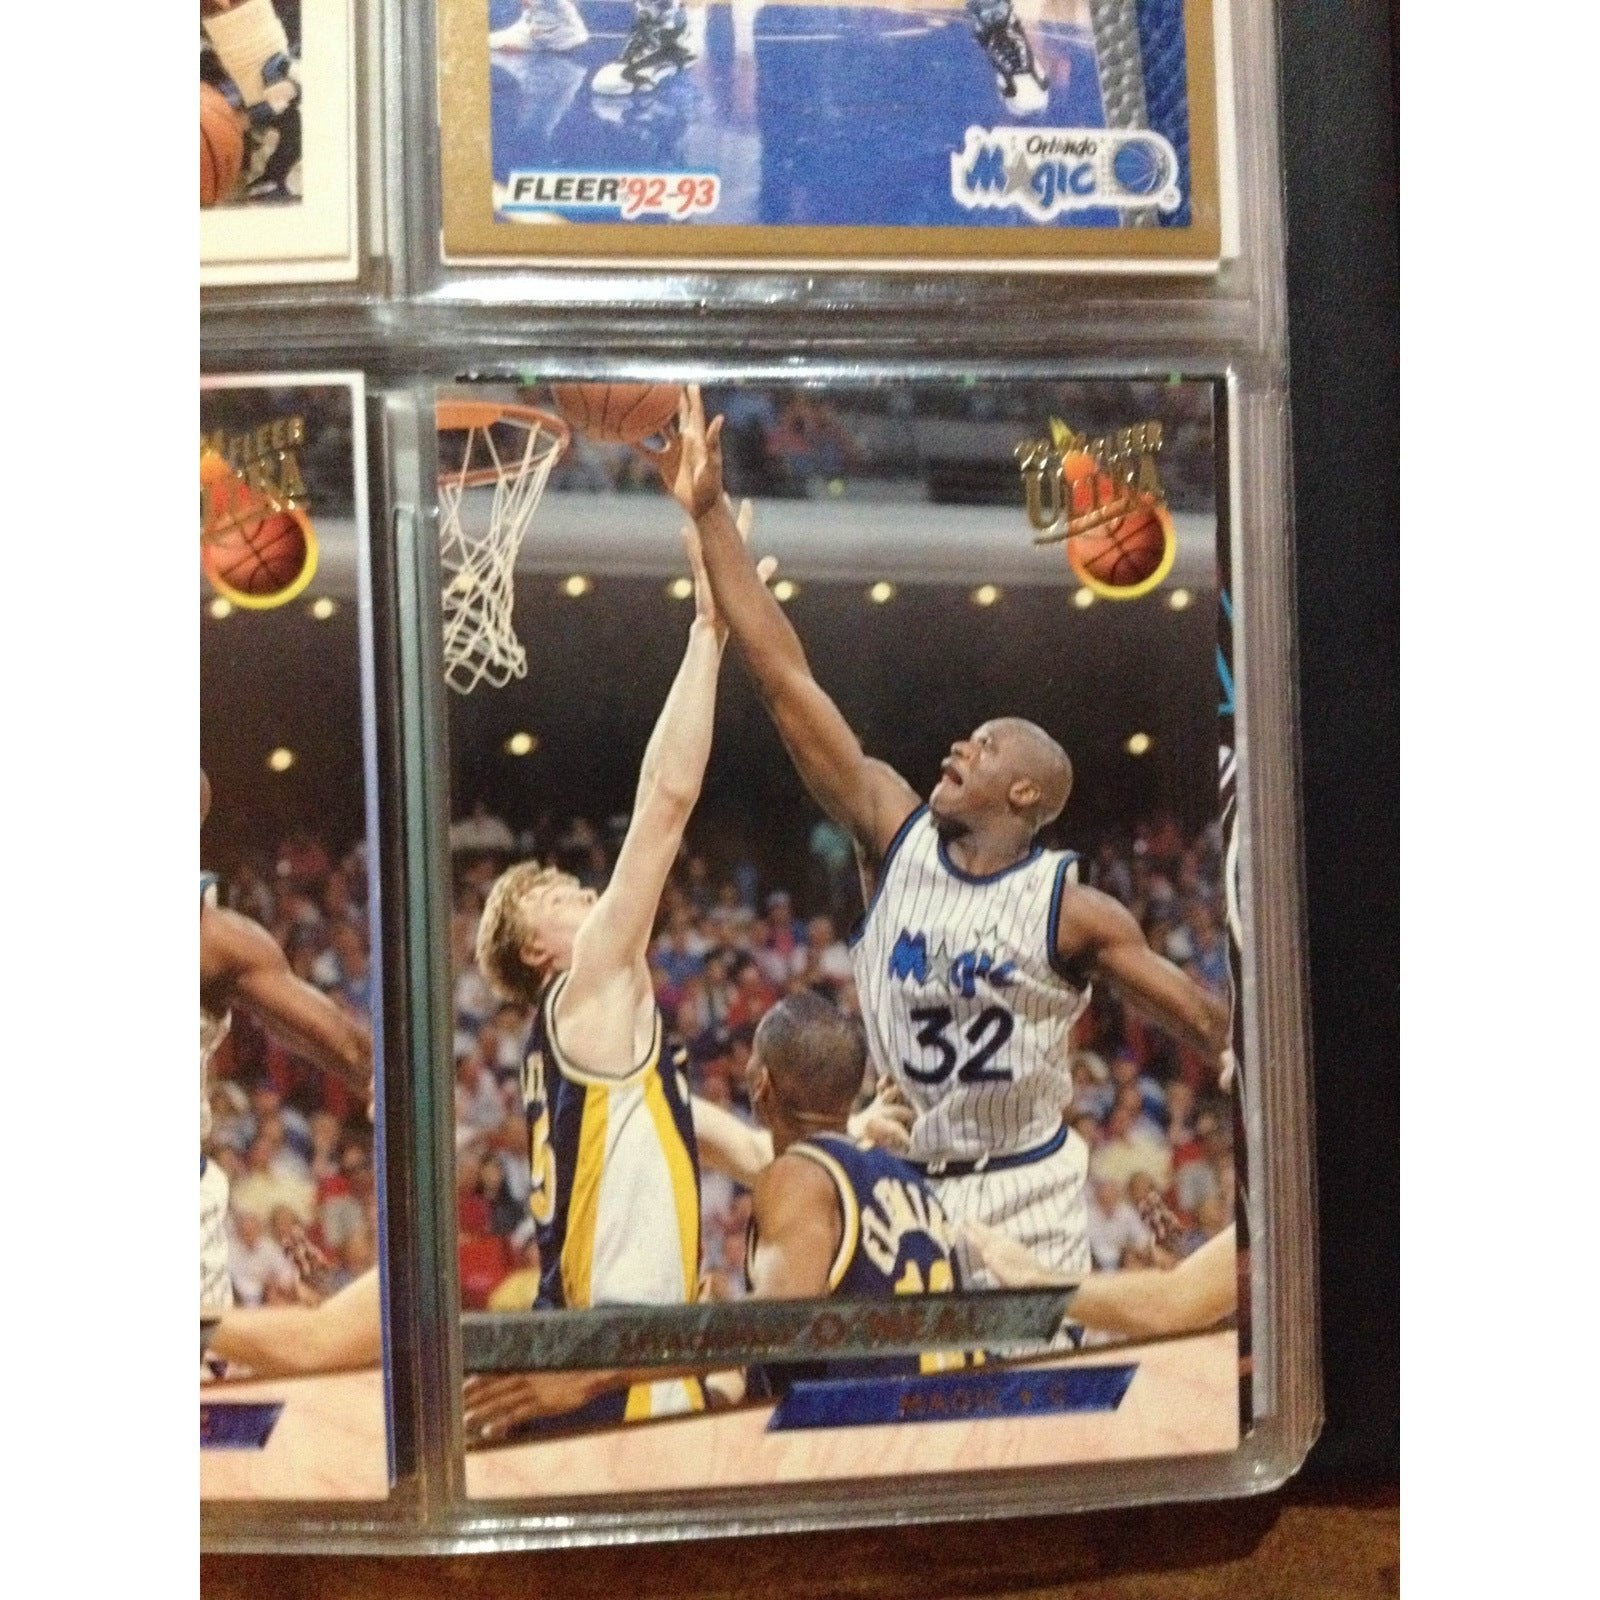 Basketball Cards: Michael Jordan + Scottie Pippen + Shaquille O'Neal [Rookie Album] BooksCardsNBikes